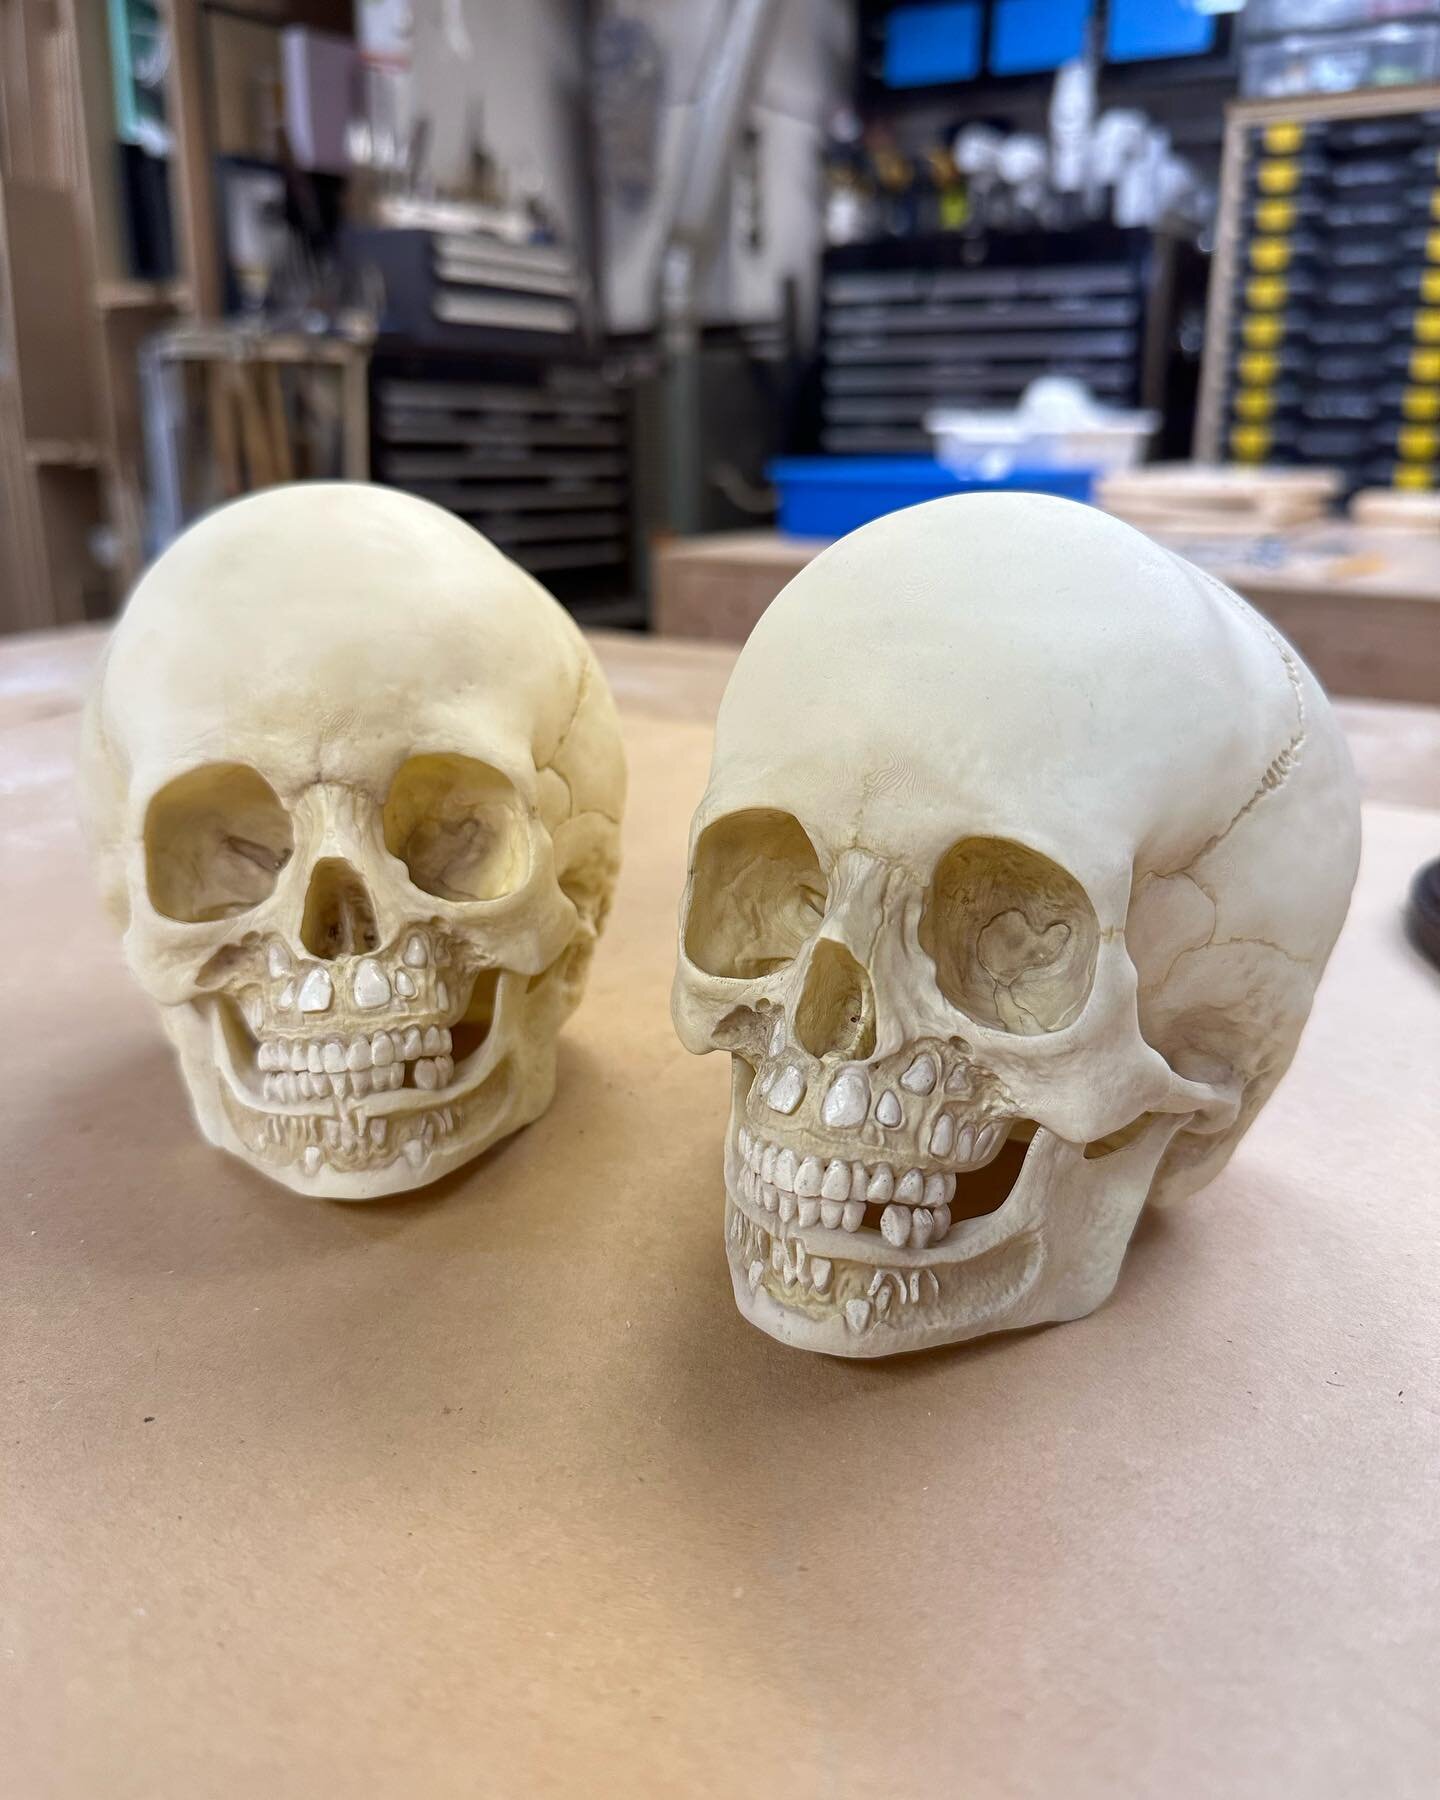 A little something I whipped up recently&hellip;

#make #maker #props #propmaker #propmaking #3dprint #3dprinting #resin3dprinting #skull #skulls #toddlerskull